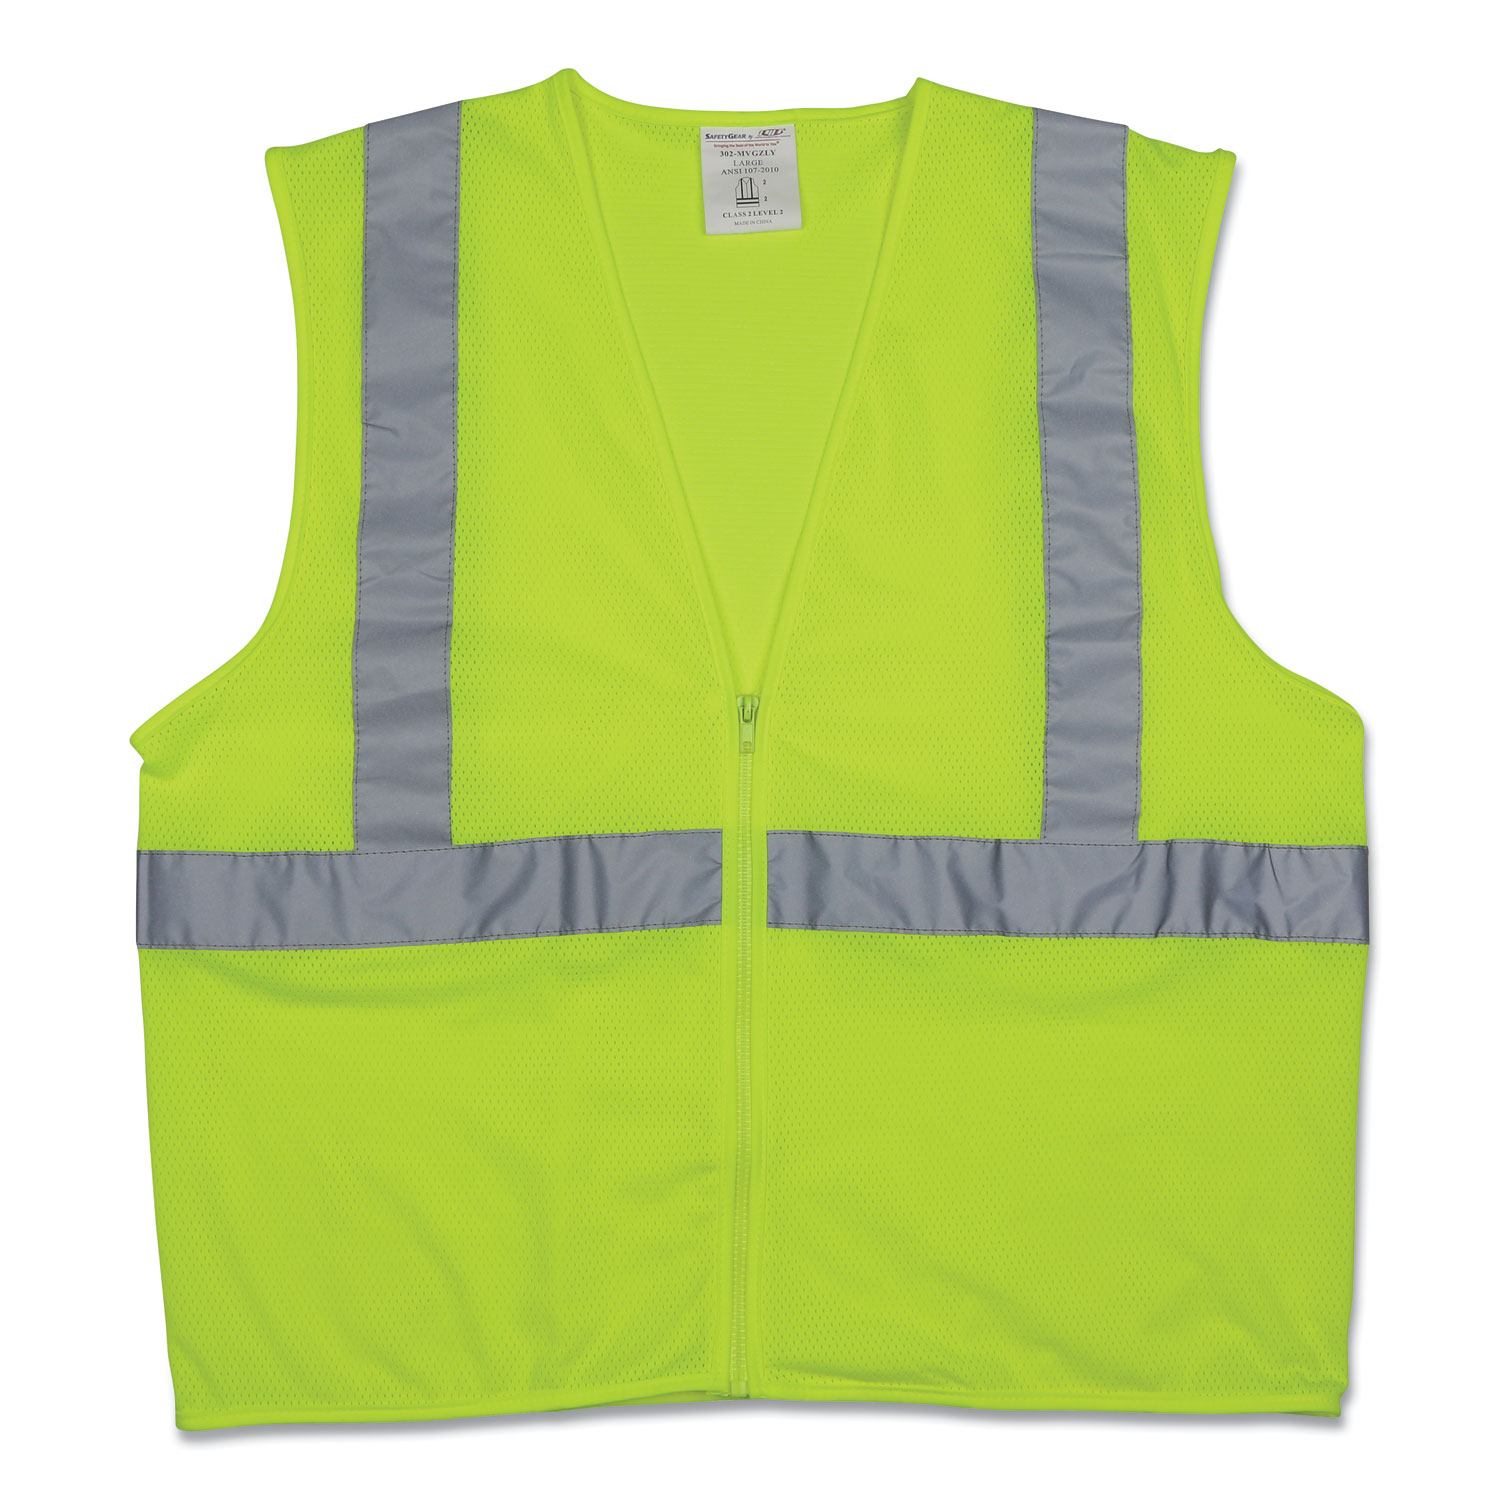  PIP 302-MVGZLY-XL Zipper Safety Vest, Hi-Viz Lime Yellow, X-Large (PID1074212) 